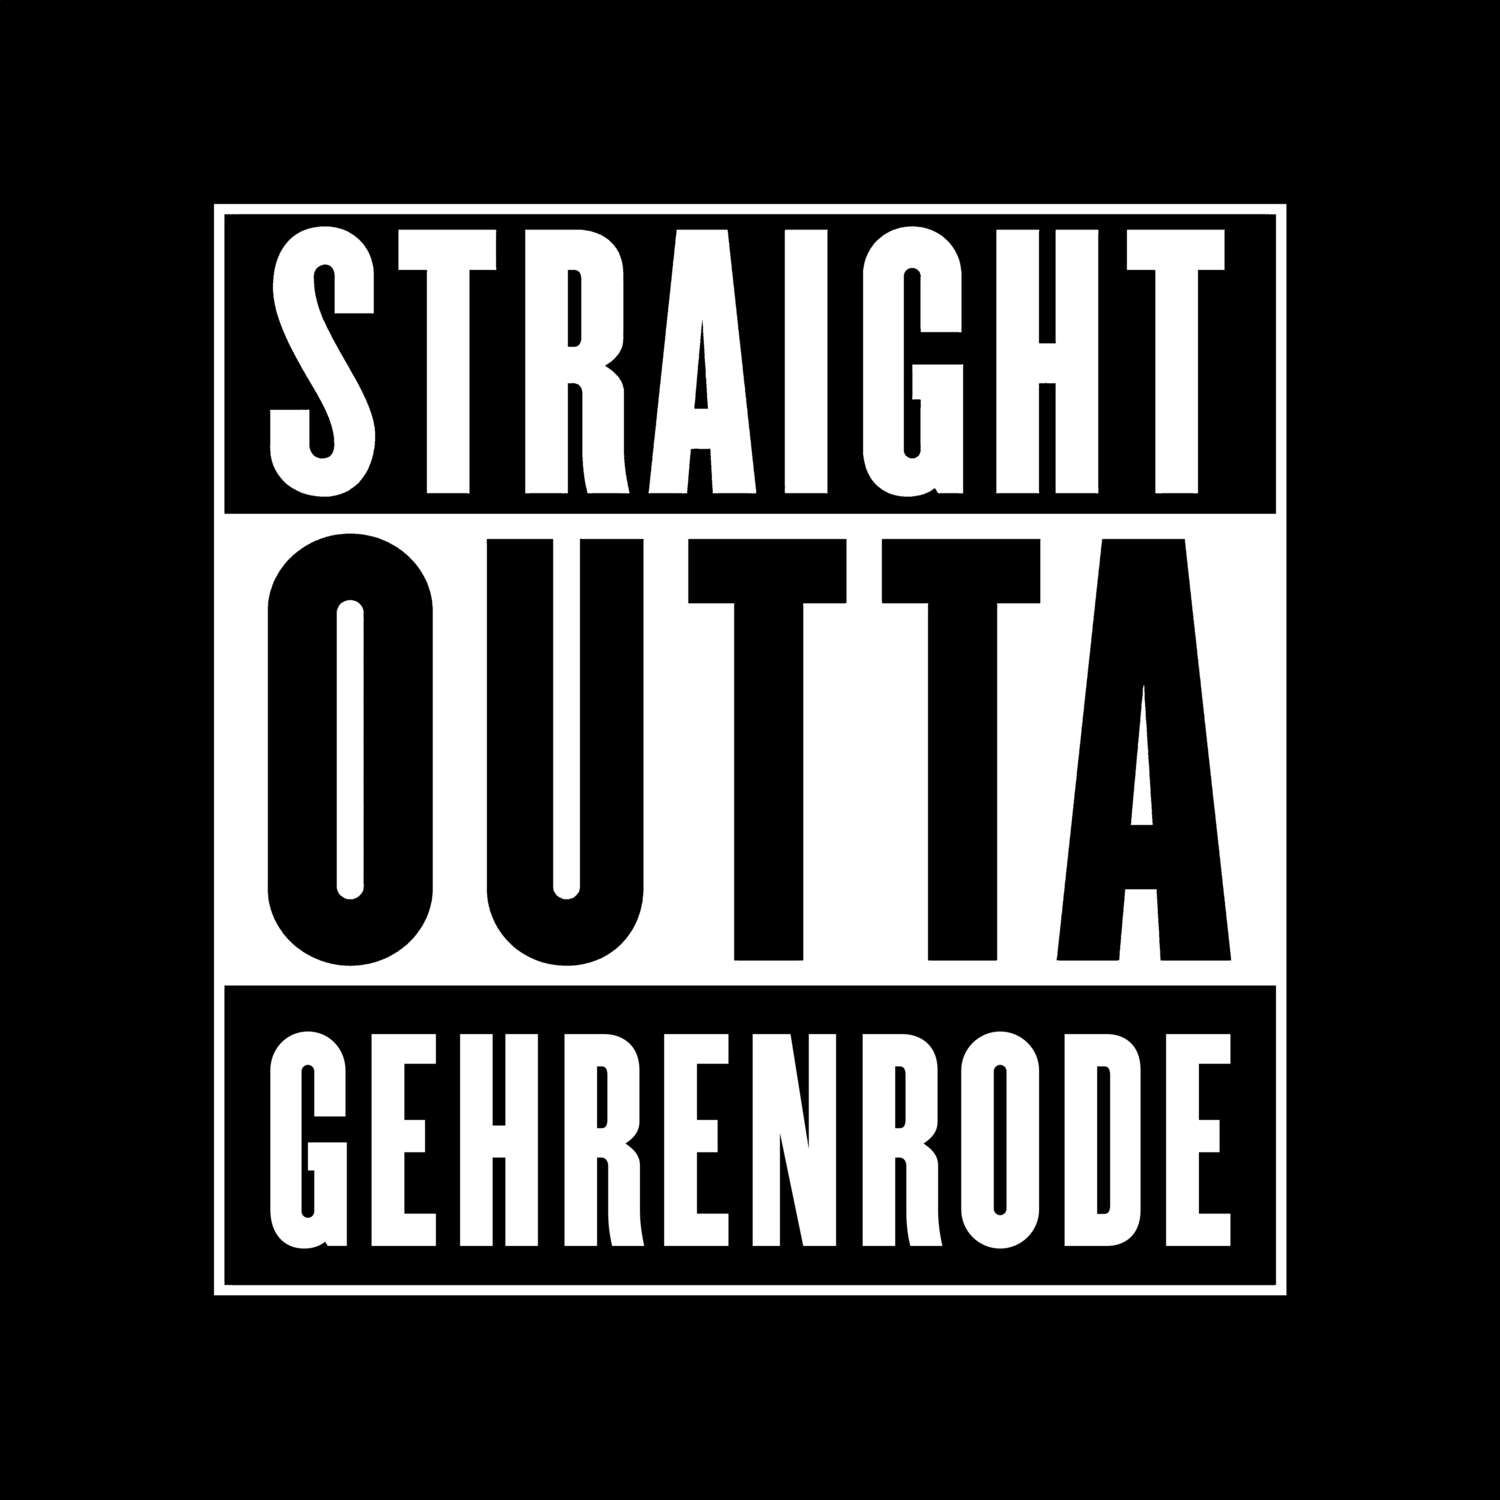 Gehrenrode T-Shirt »Straight Outta«